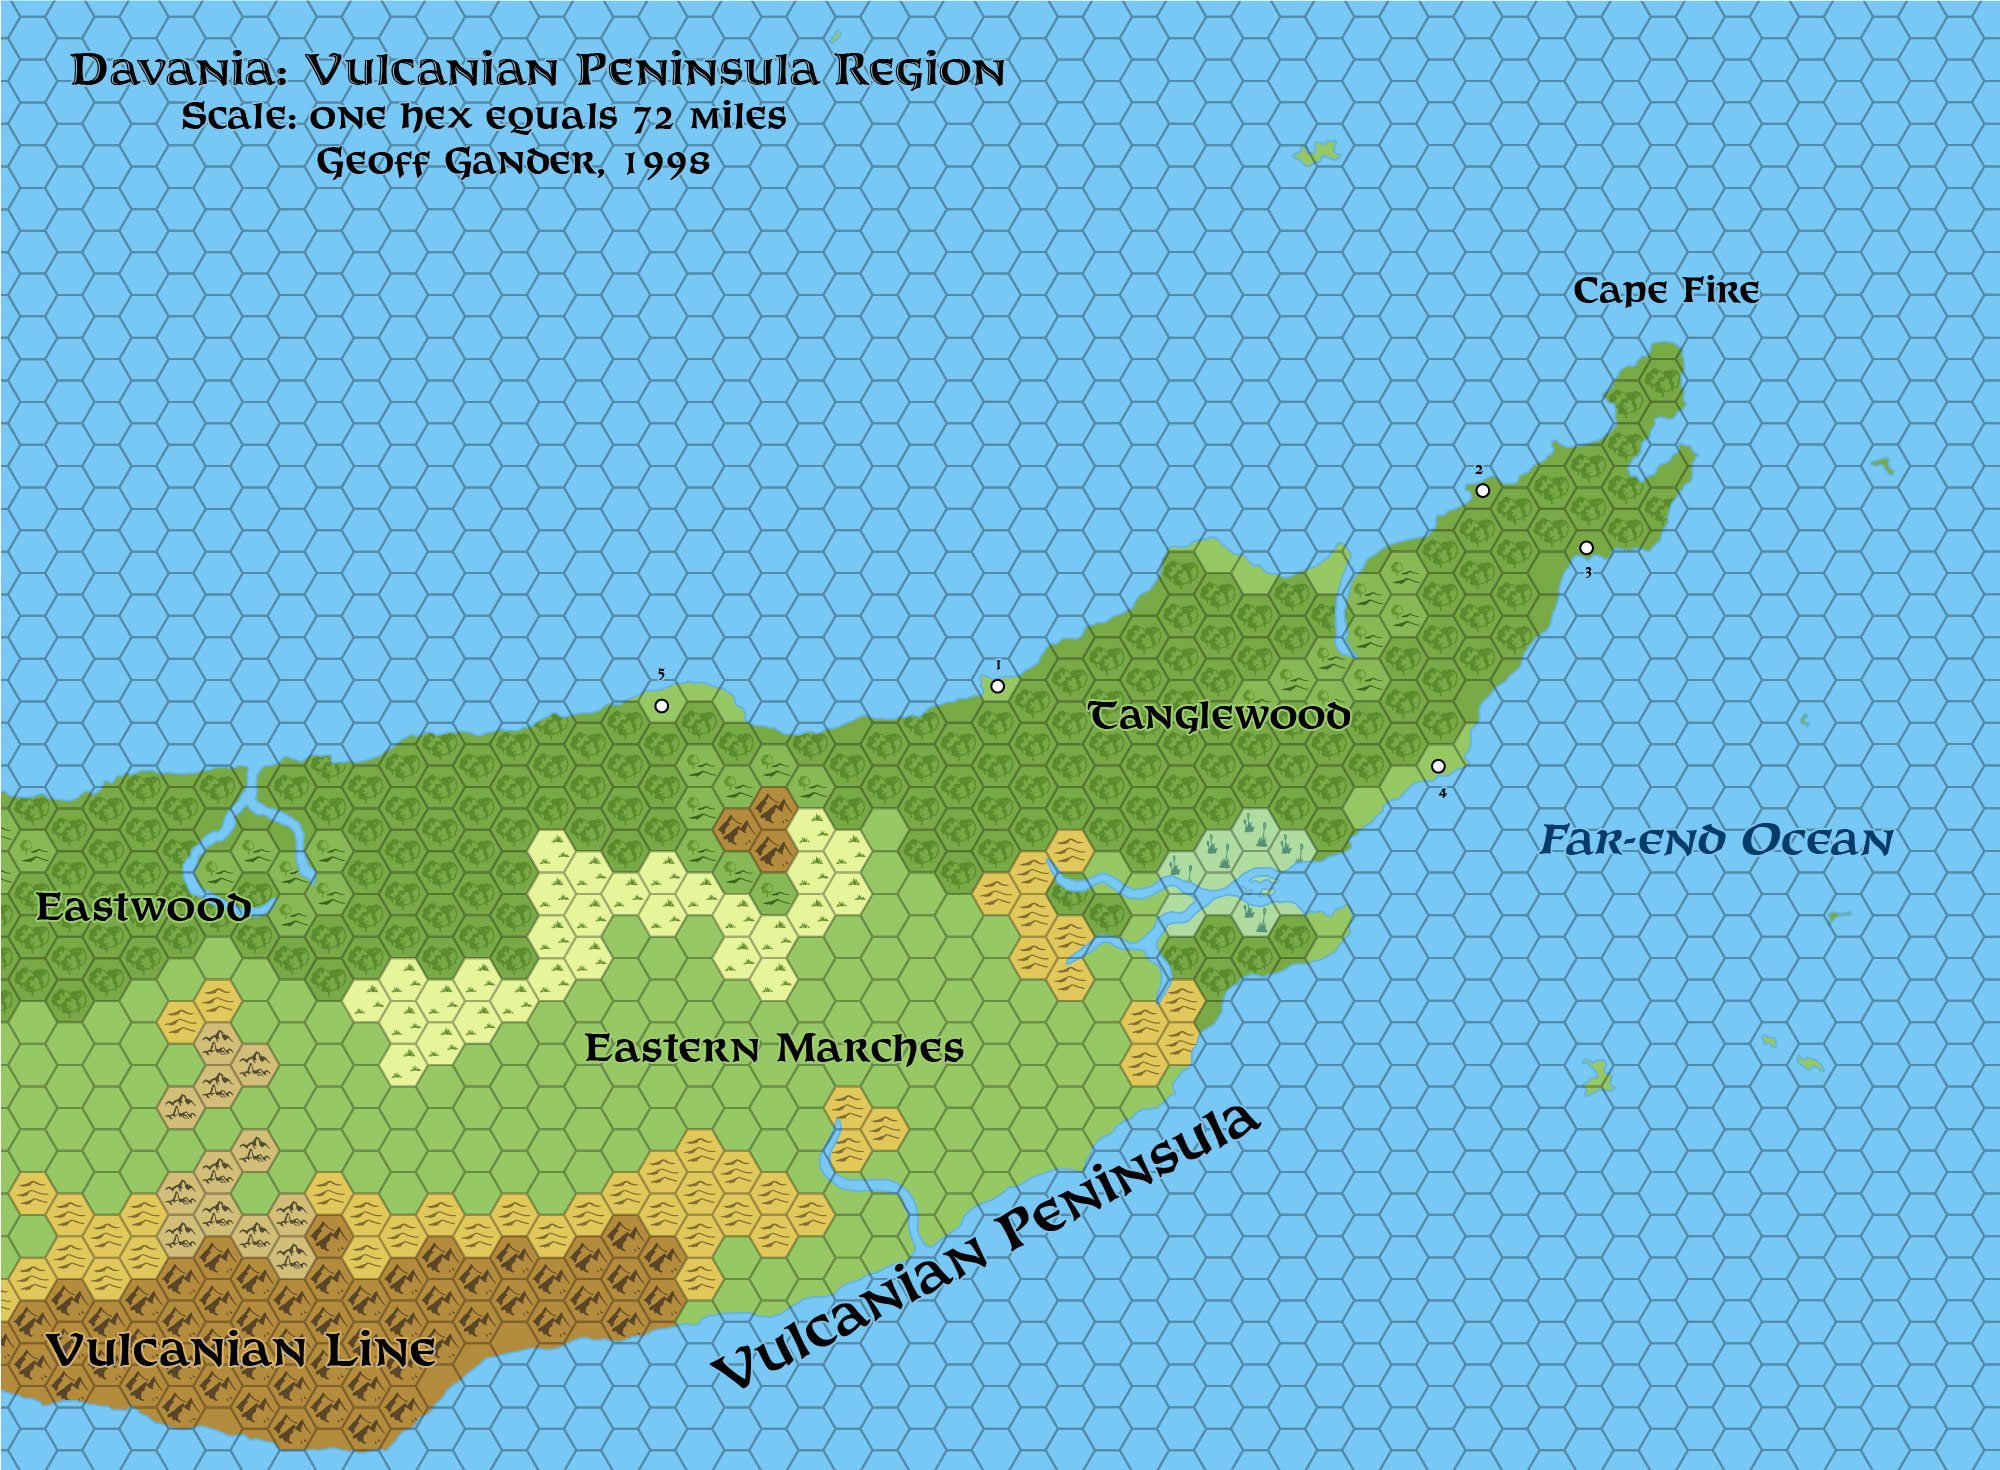 Standardised replica of Geoff Gander’s Davania: Vulcanian Peninsula Region, 72 miles per hex